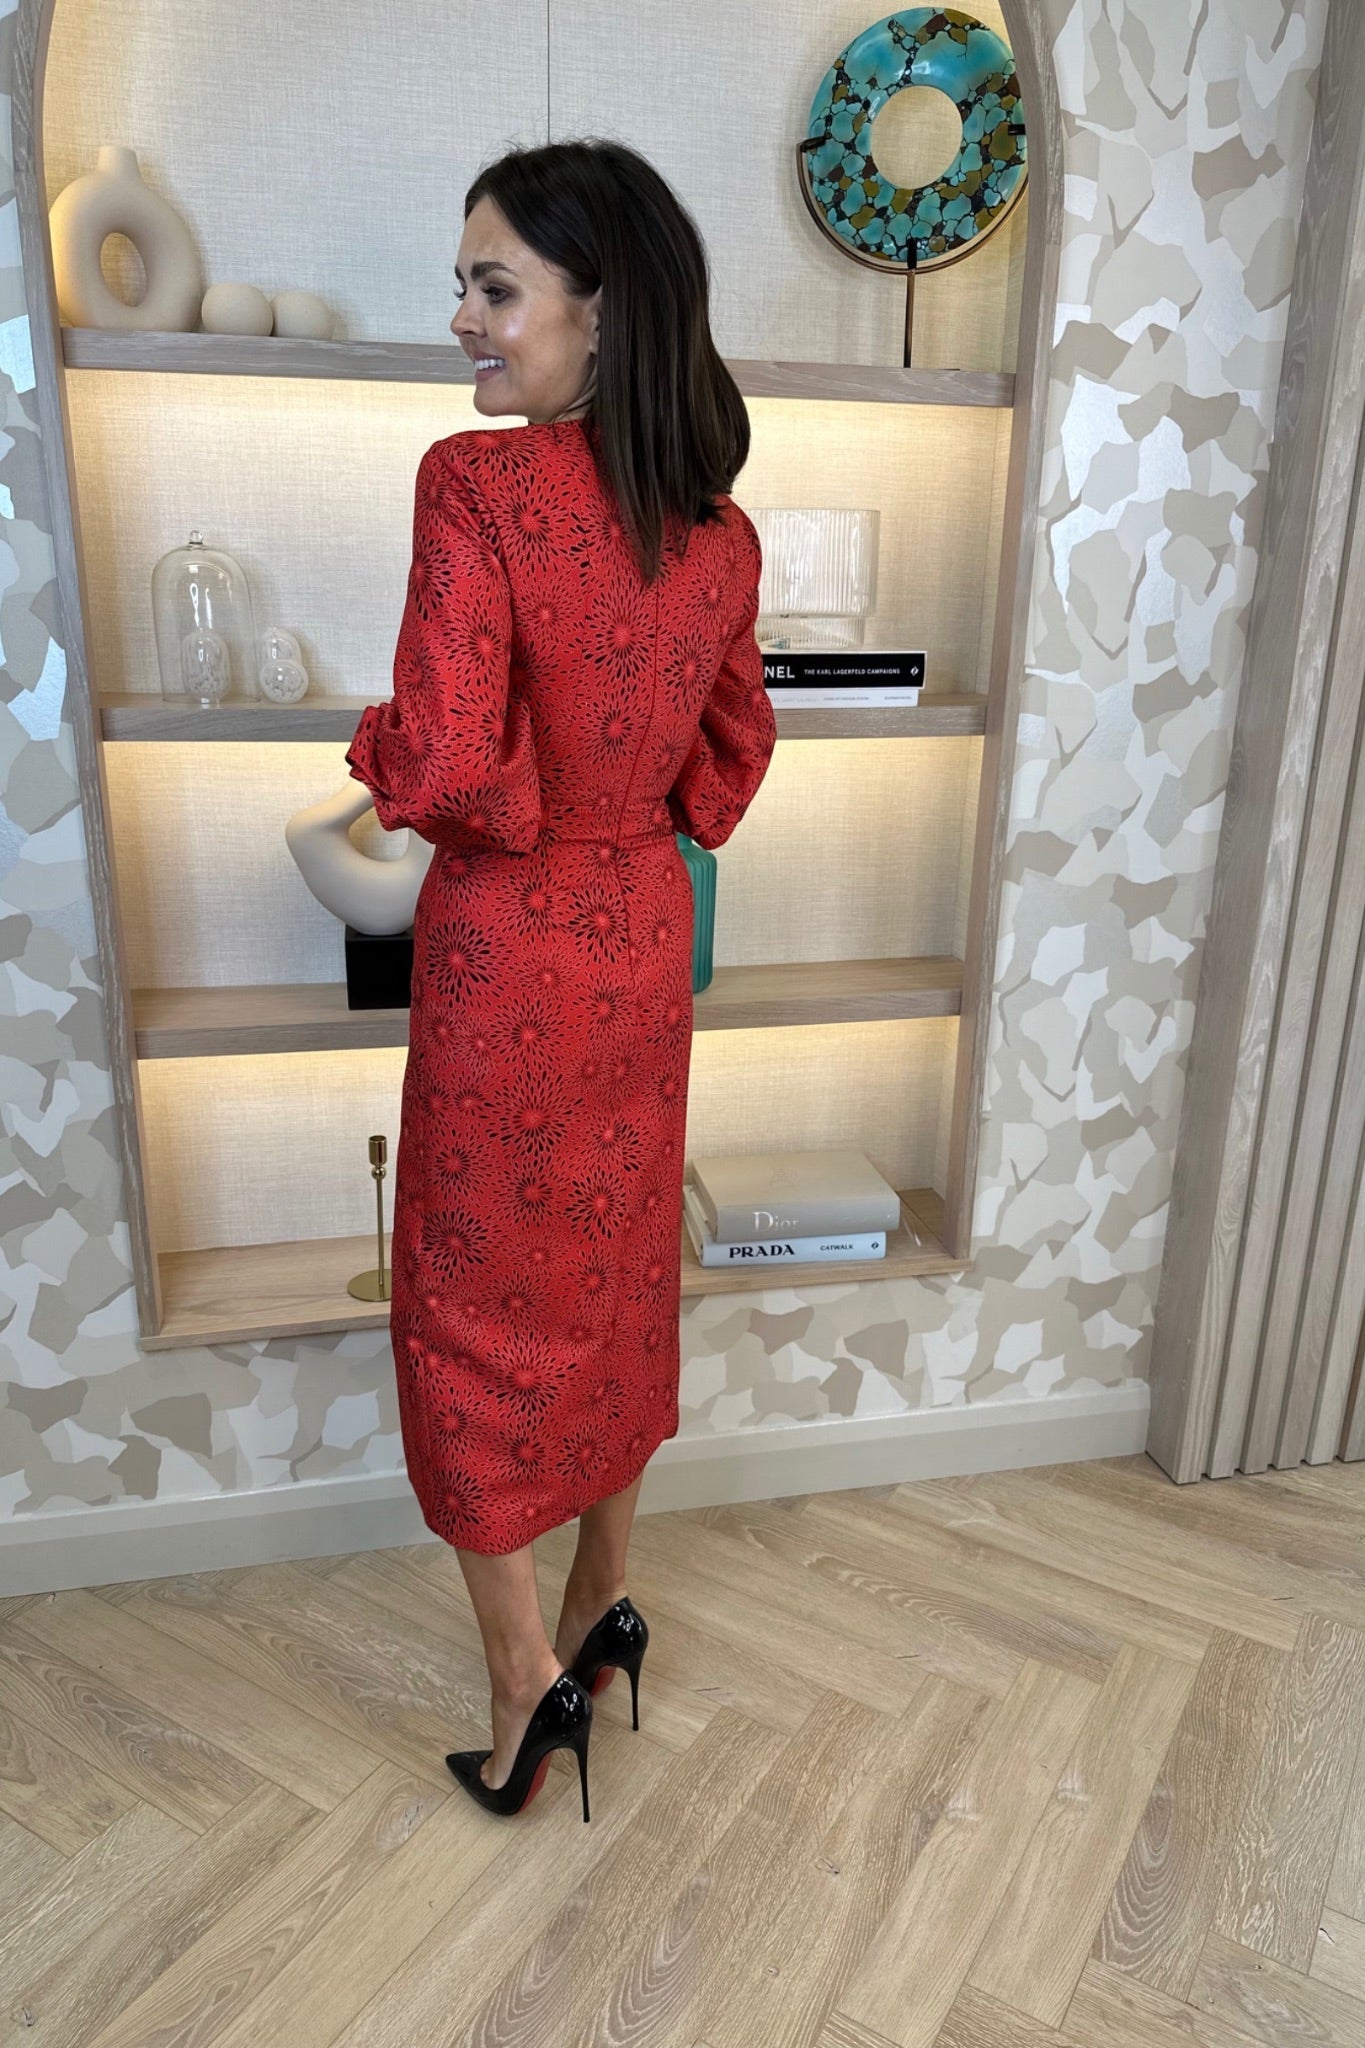 Eva Cut Out Sleeve Dress In Red & Black - The Walk in Wardrobe